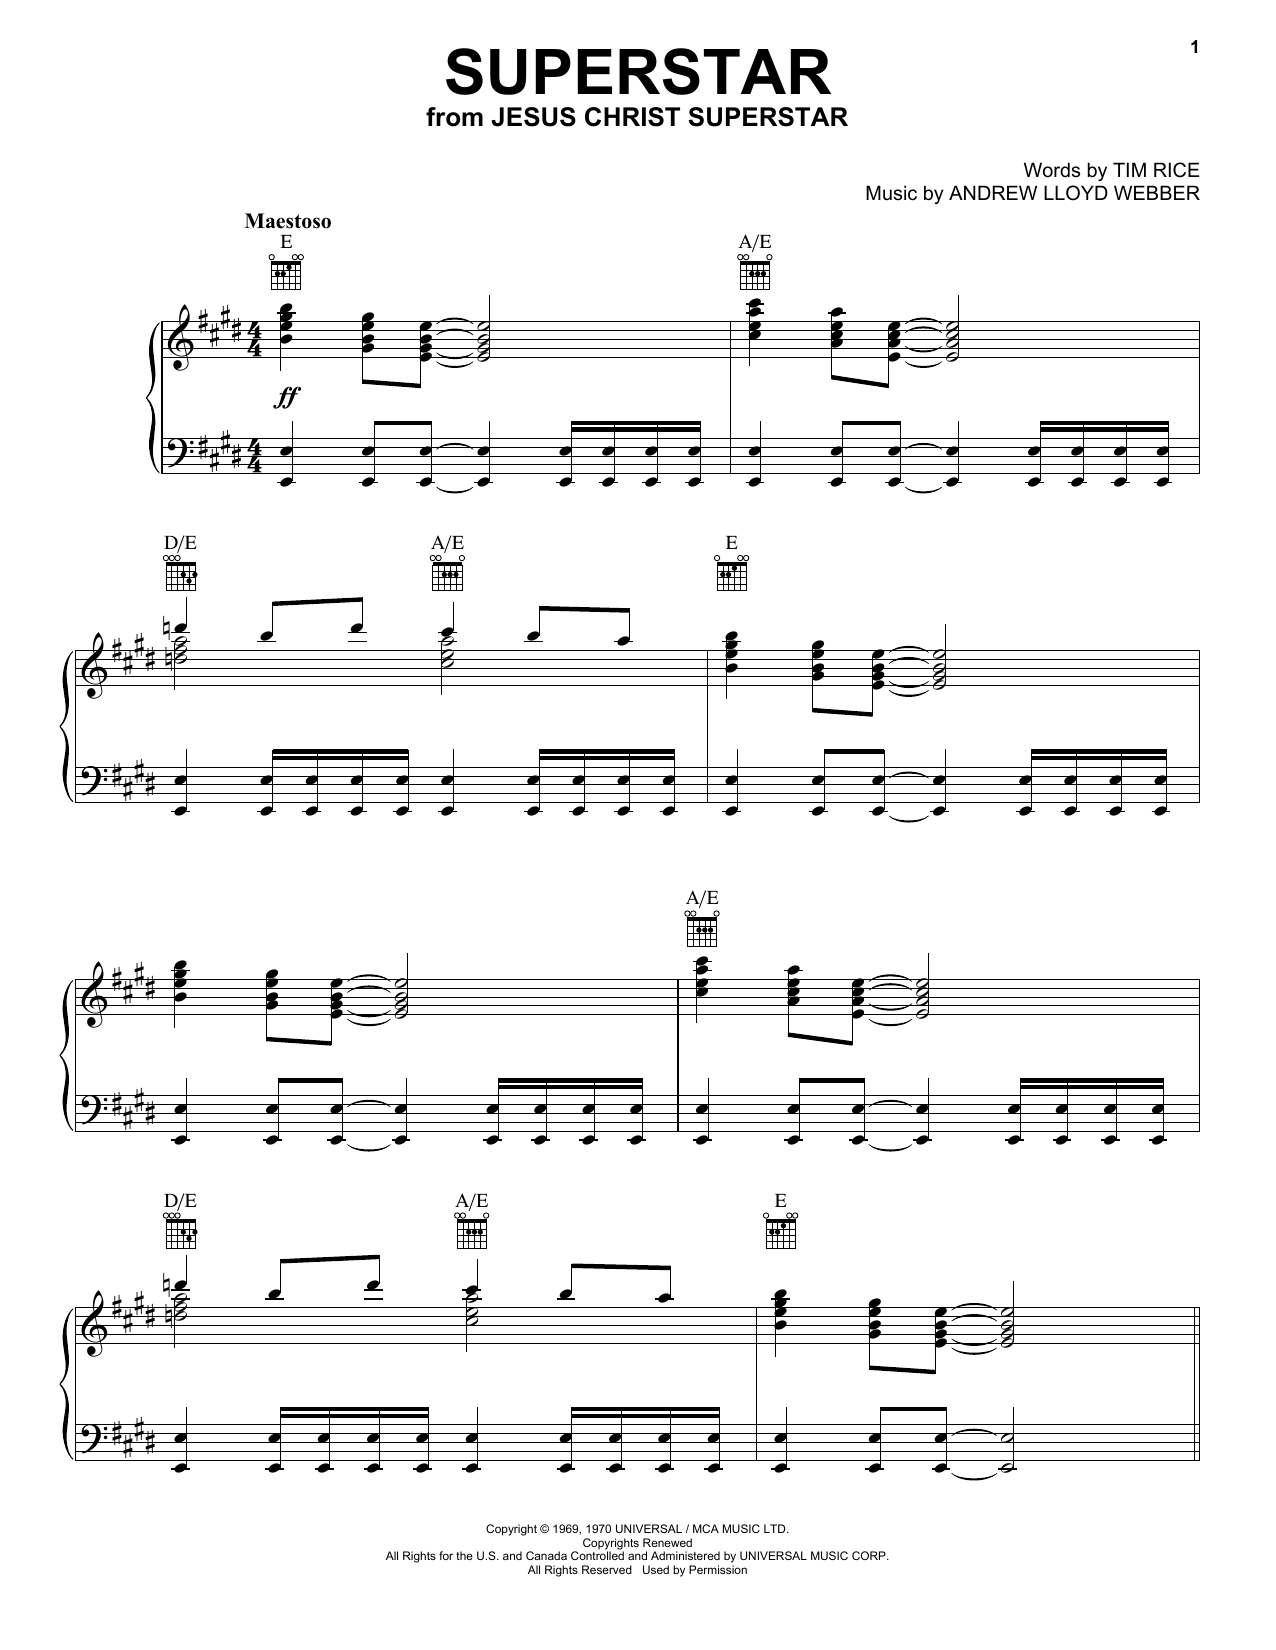 Andrew Lloyd Webber Superstar (from Jesus Christ Superstar) Sheet Music Notes & Chords for French Horn - Download or Print PDF